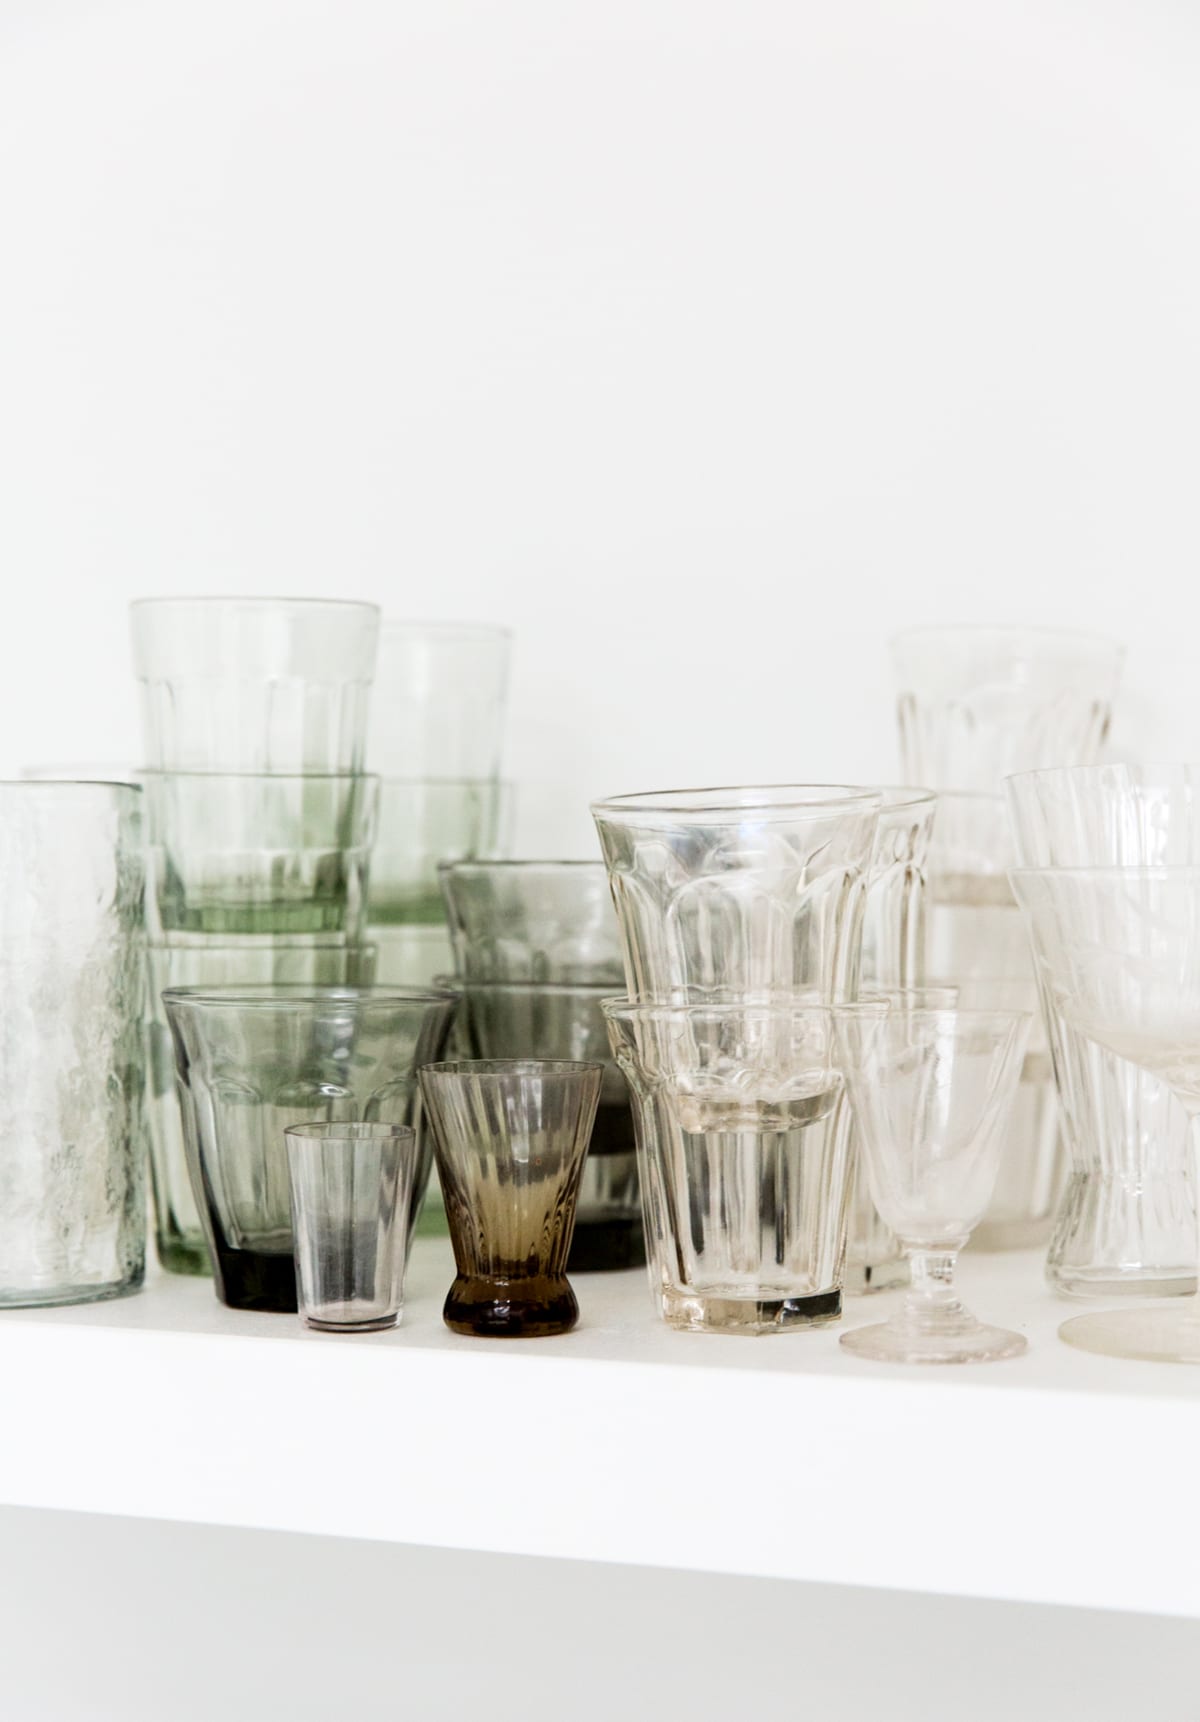 glassware organized by color in this backyard studio kitchen | coco kelley